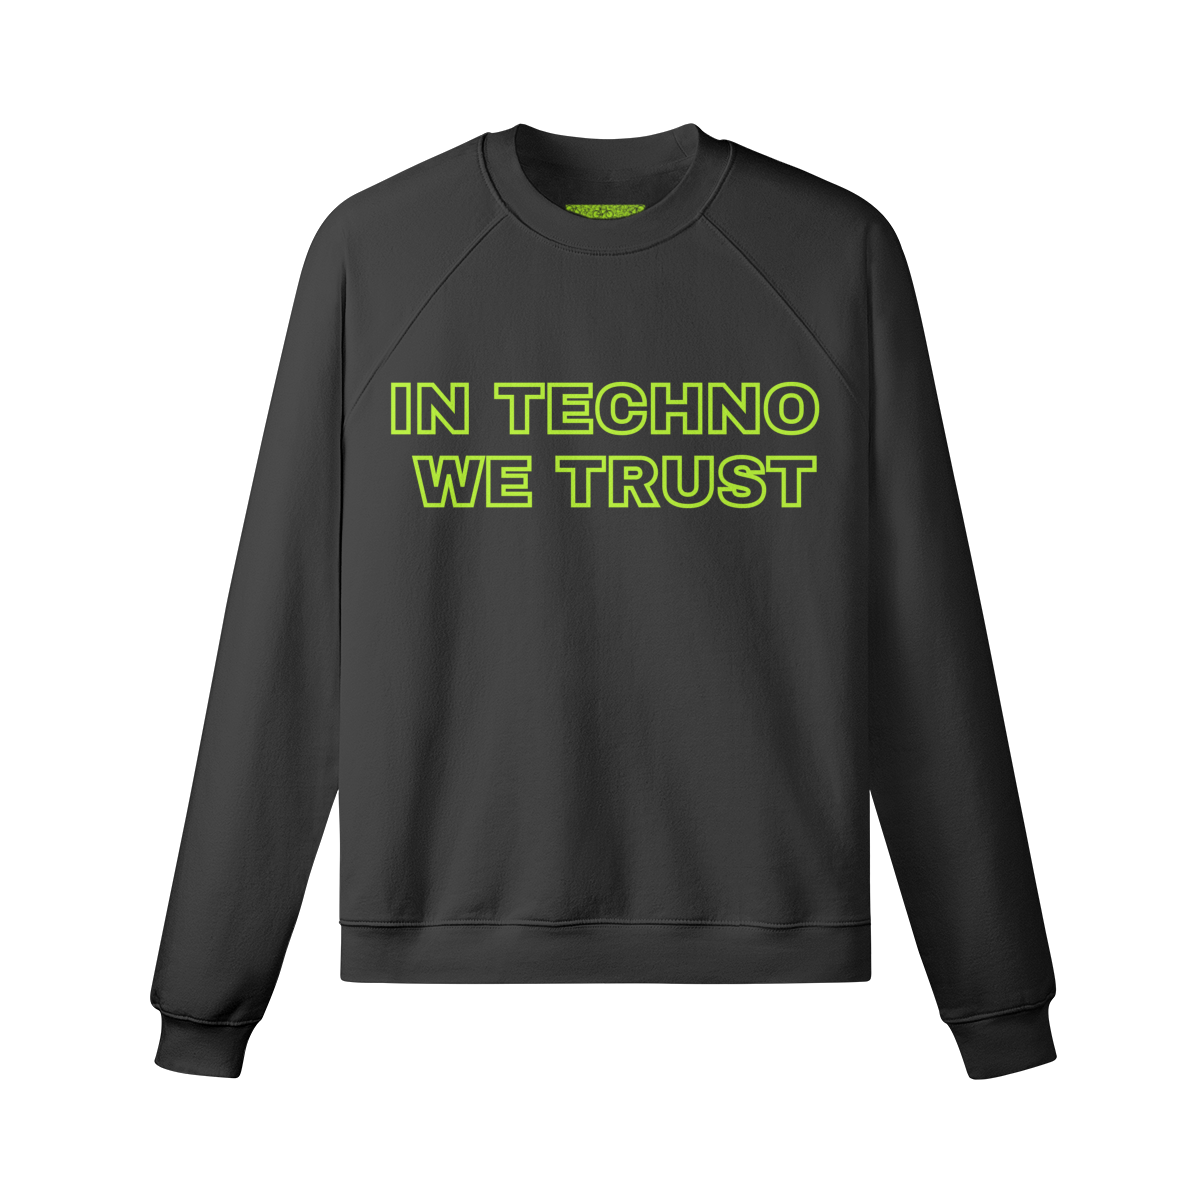 IN TECHNO WE TRUST - Unisex Fleece-lined Sweatshirt